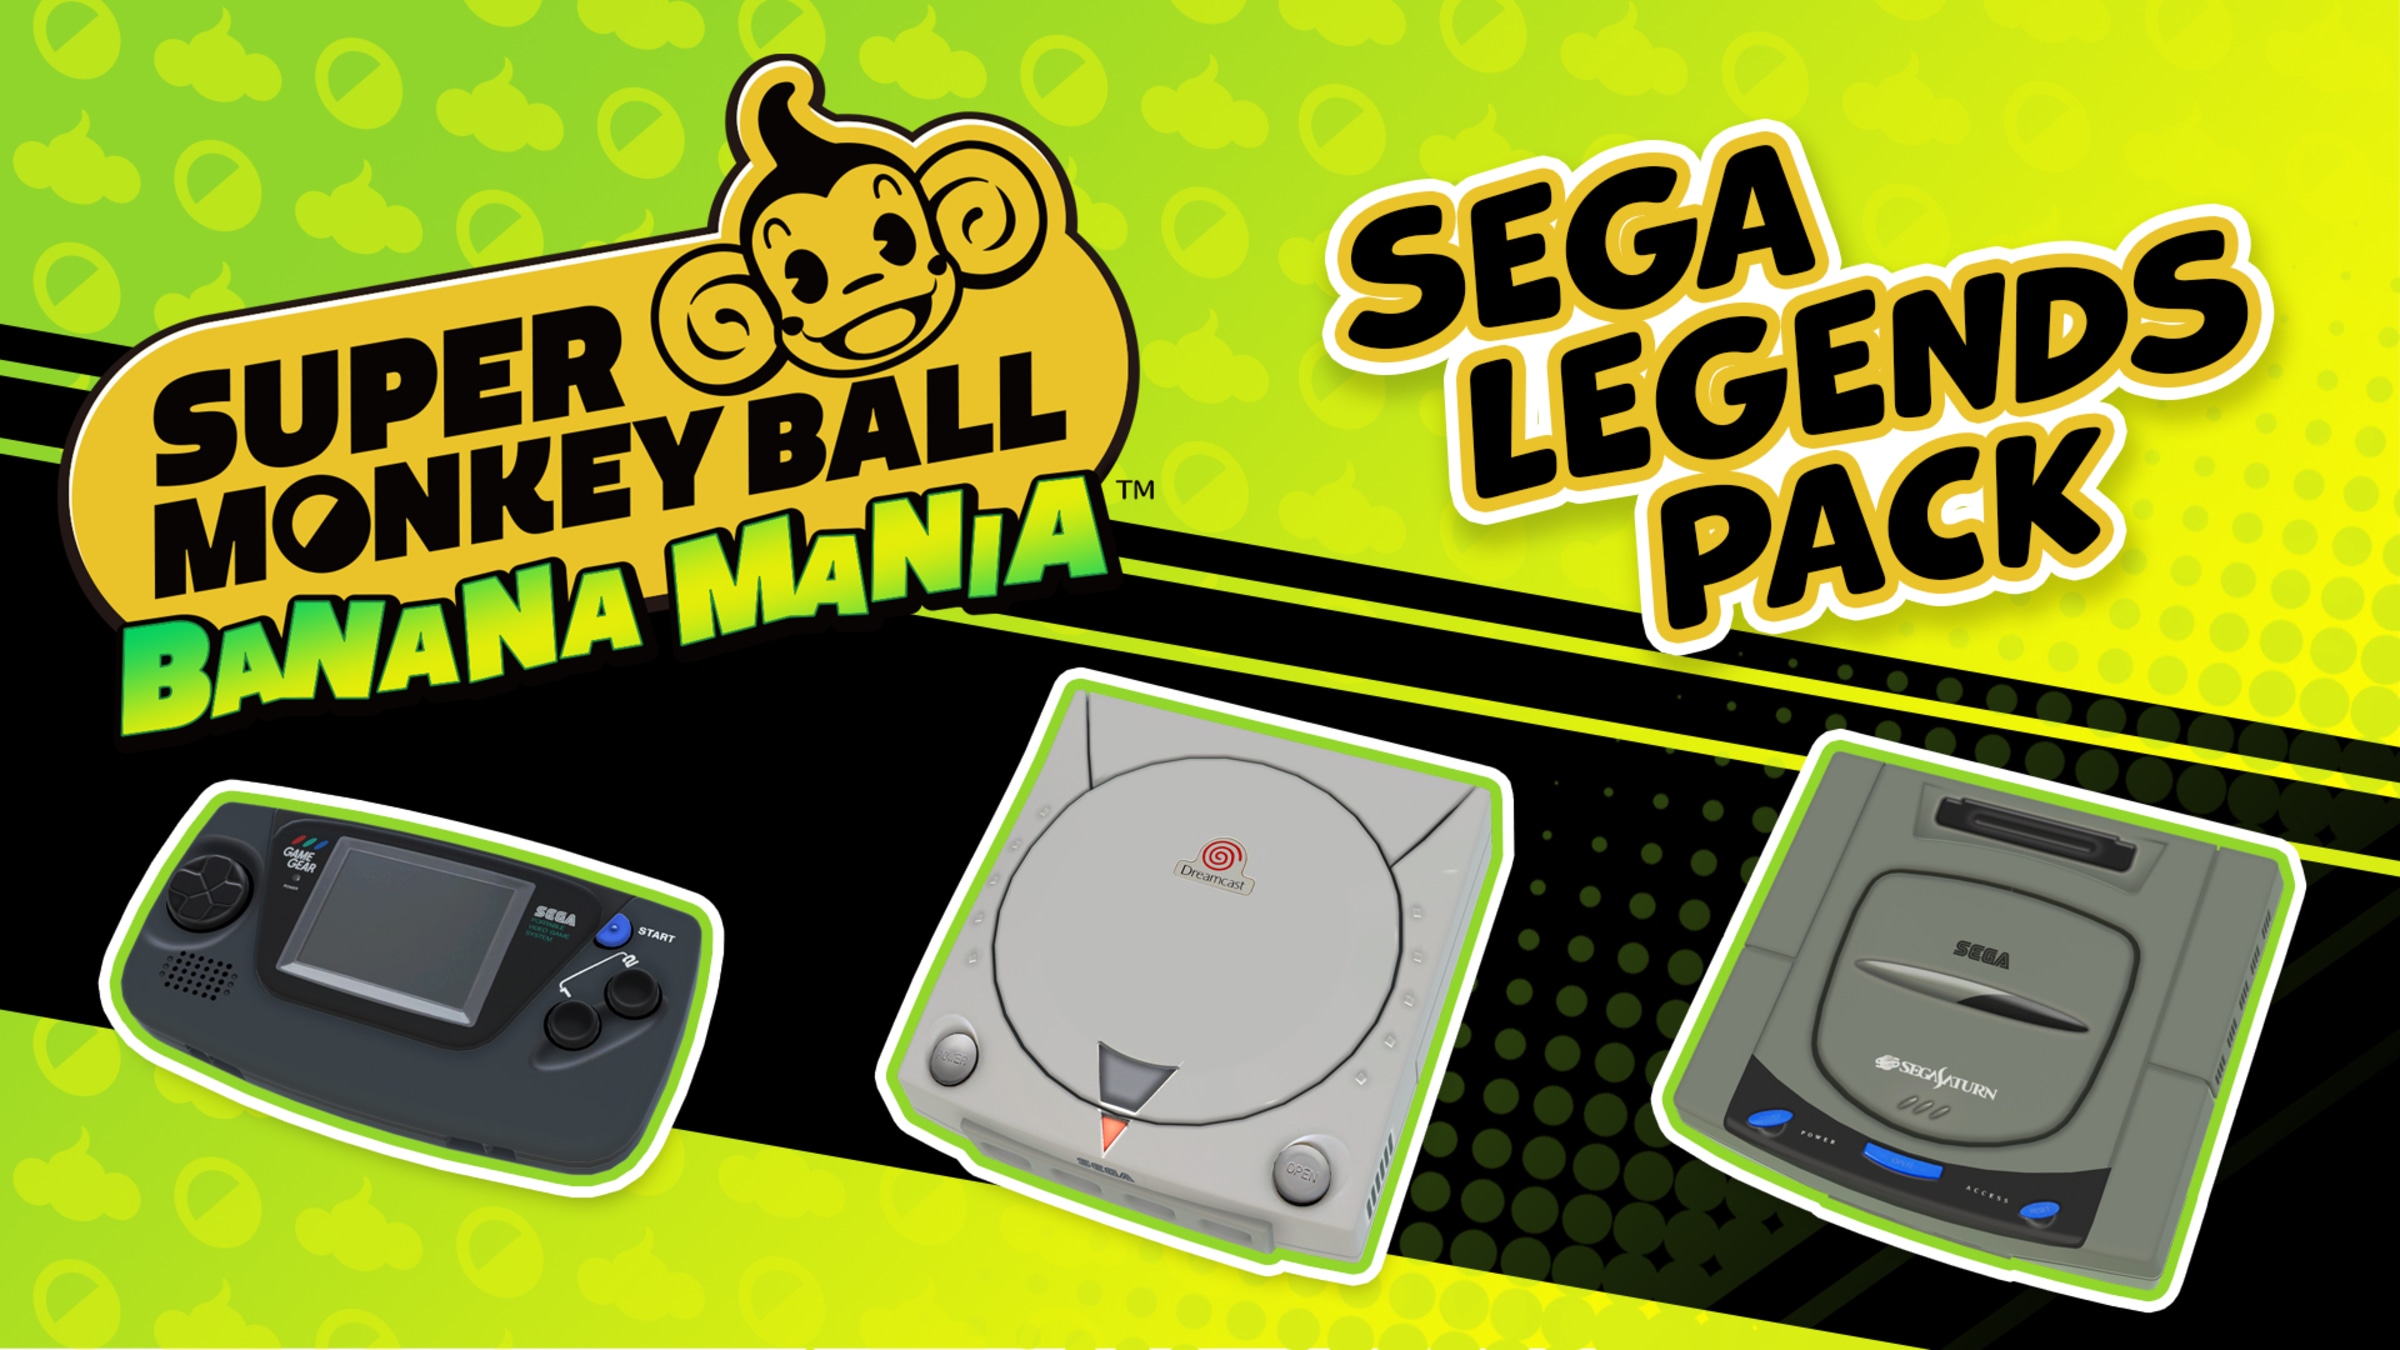 SEGA Legends Pack for Nintendo Switch - Nintendo Official Site